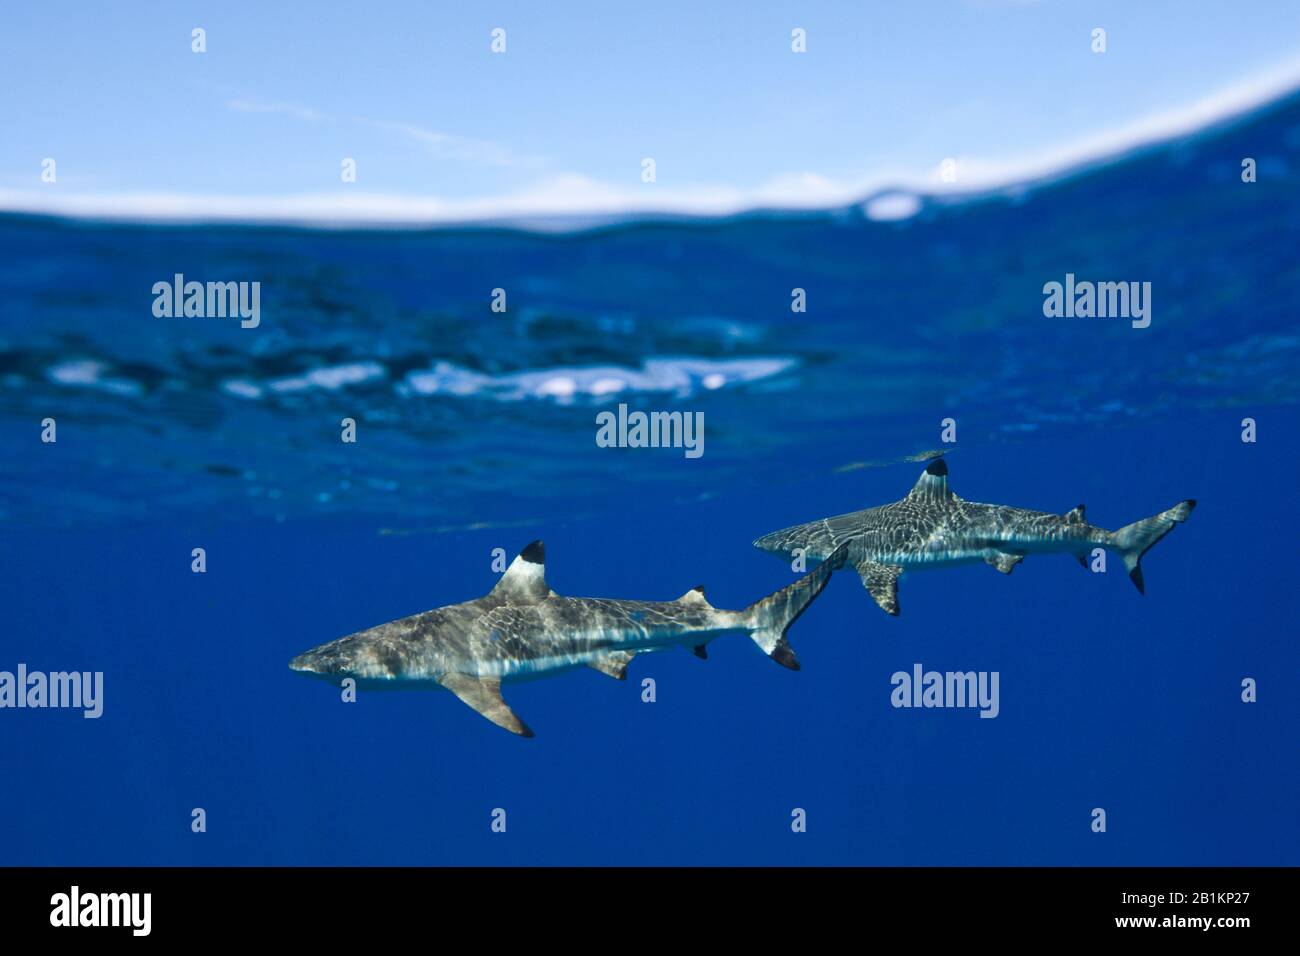 Blacktip Reef Sharks Sotto La Superficie Dell'Acqua, Carcharhinus Melanopterus, Moorea, Polinesia Francese Foto Stock